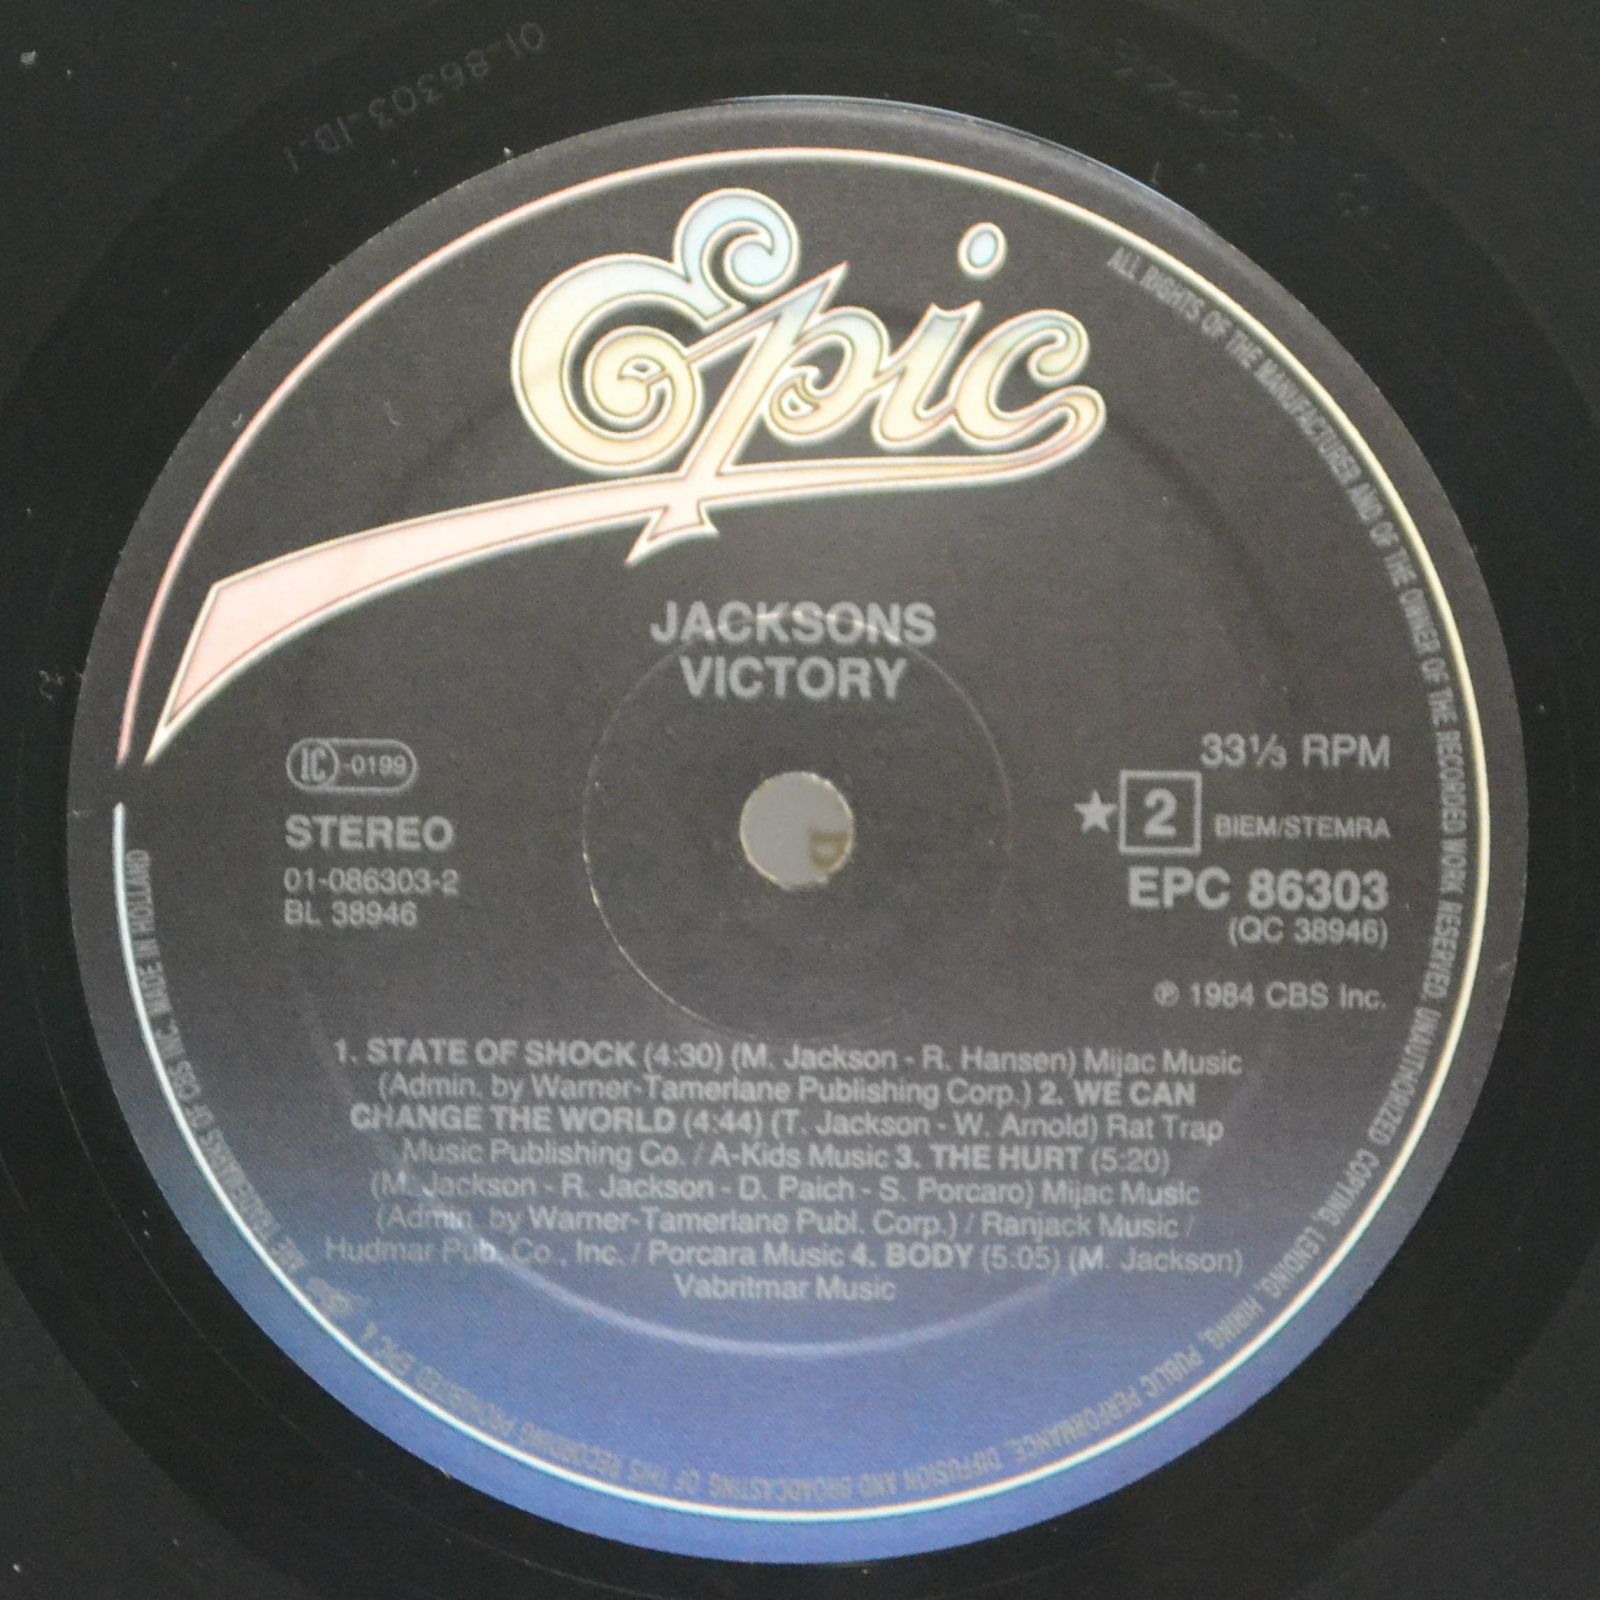 Jacksons — Victory, 1984